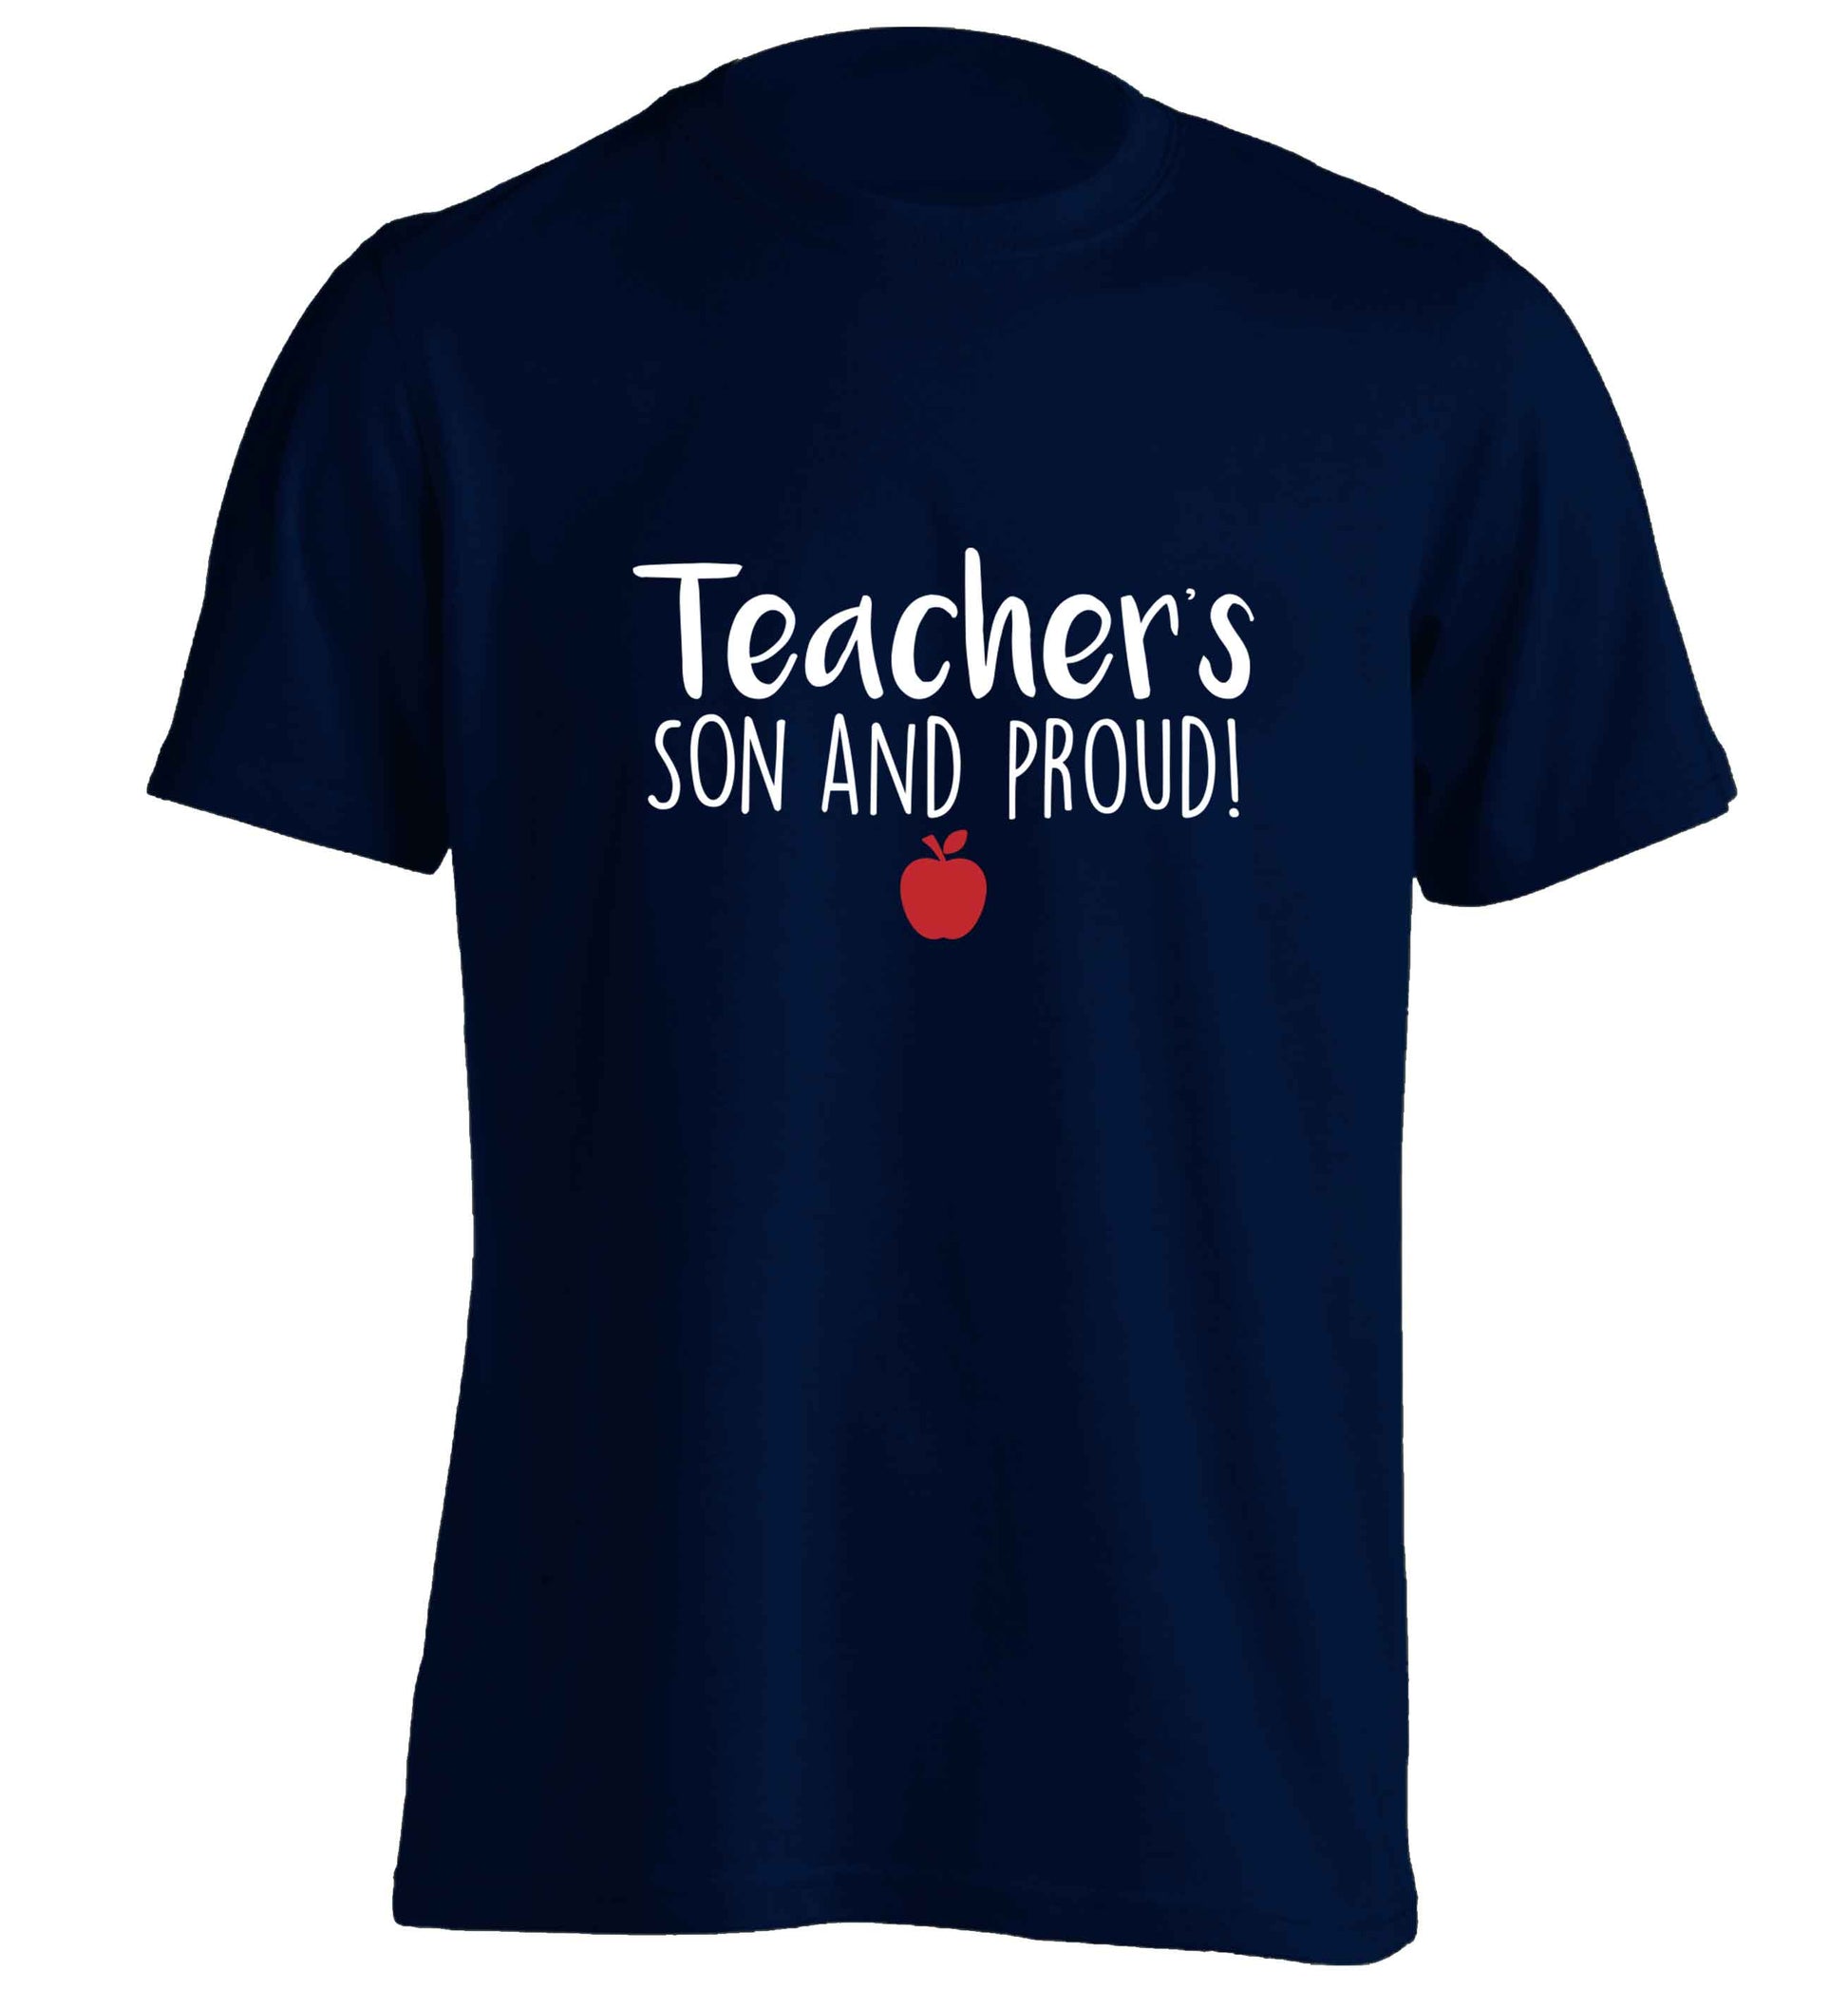 Teachers son and proud adults unisex navy Tshirt 2XL